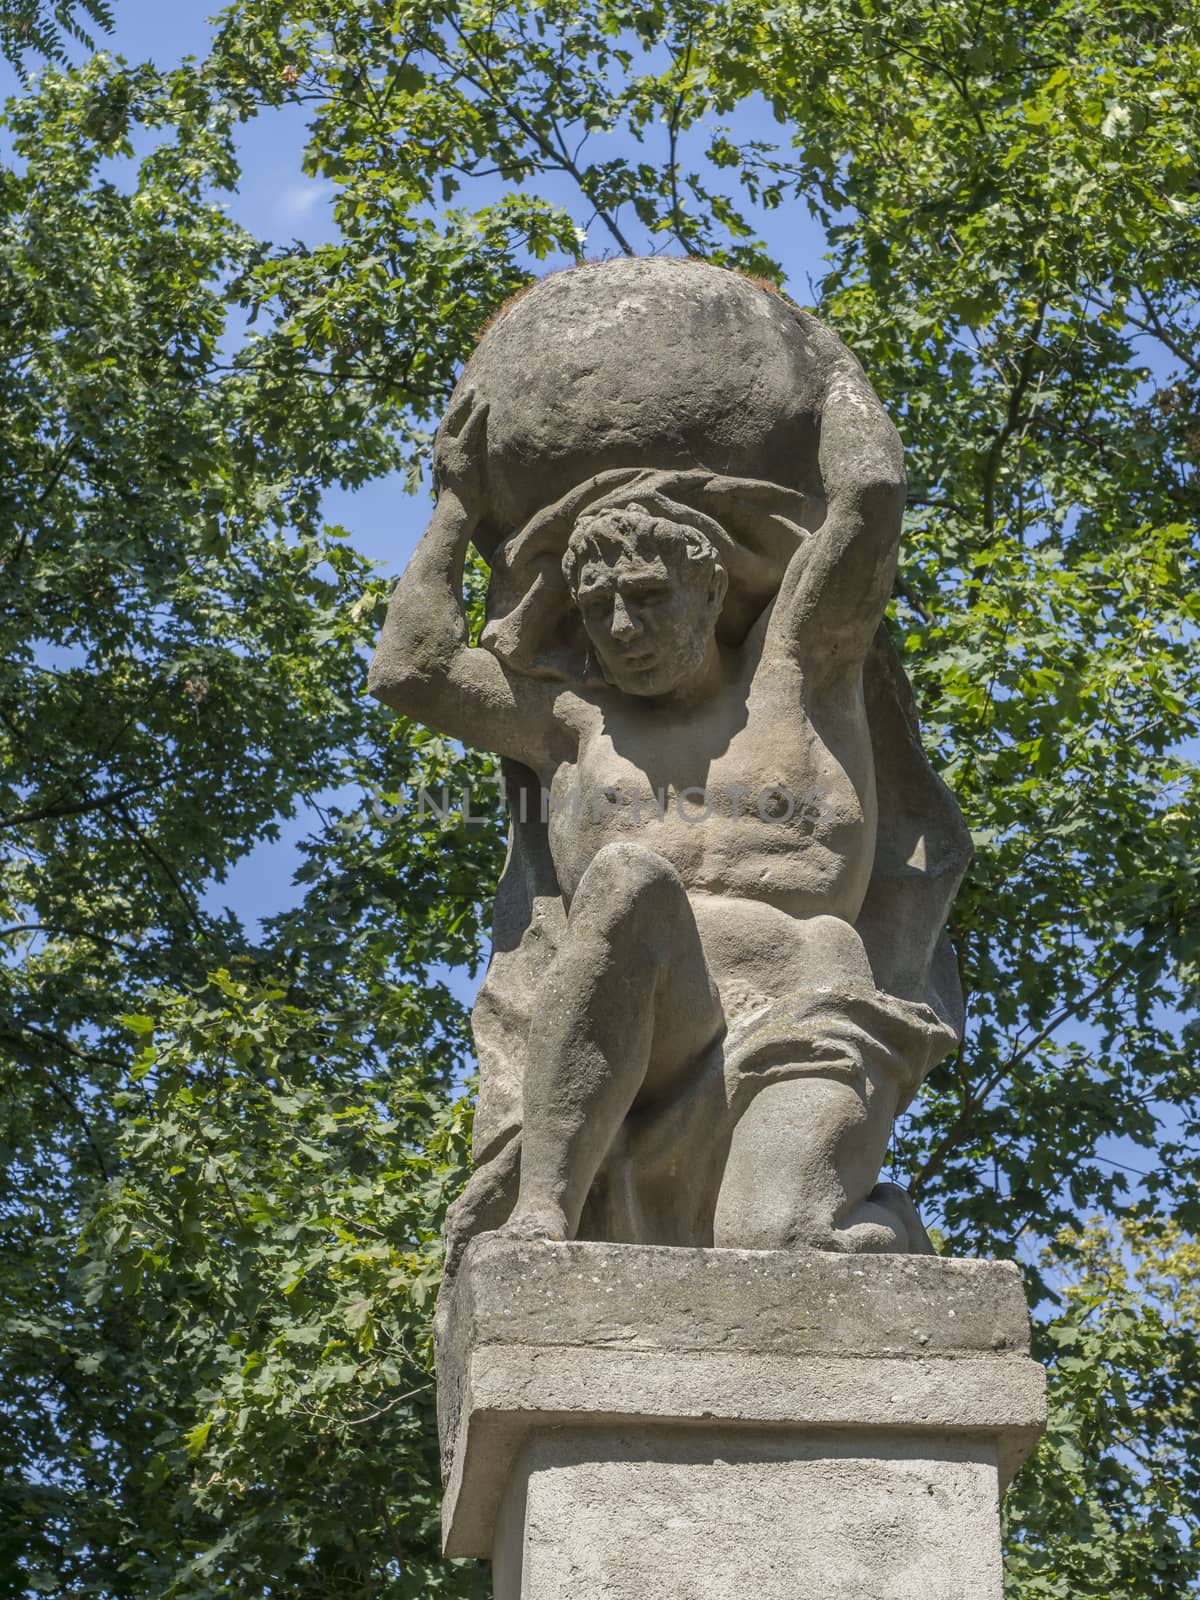 Stone men figure carrying stone, baroque statue from Greek mythology of Sisyphus or Sisyphos, garden, green trees background, czech republic